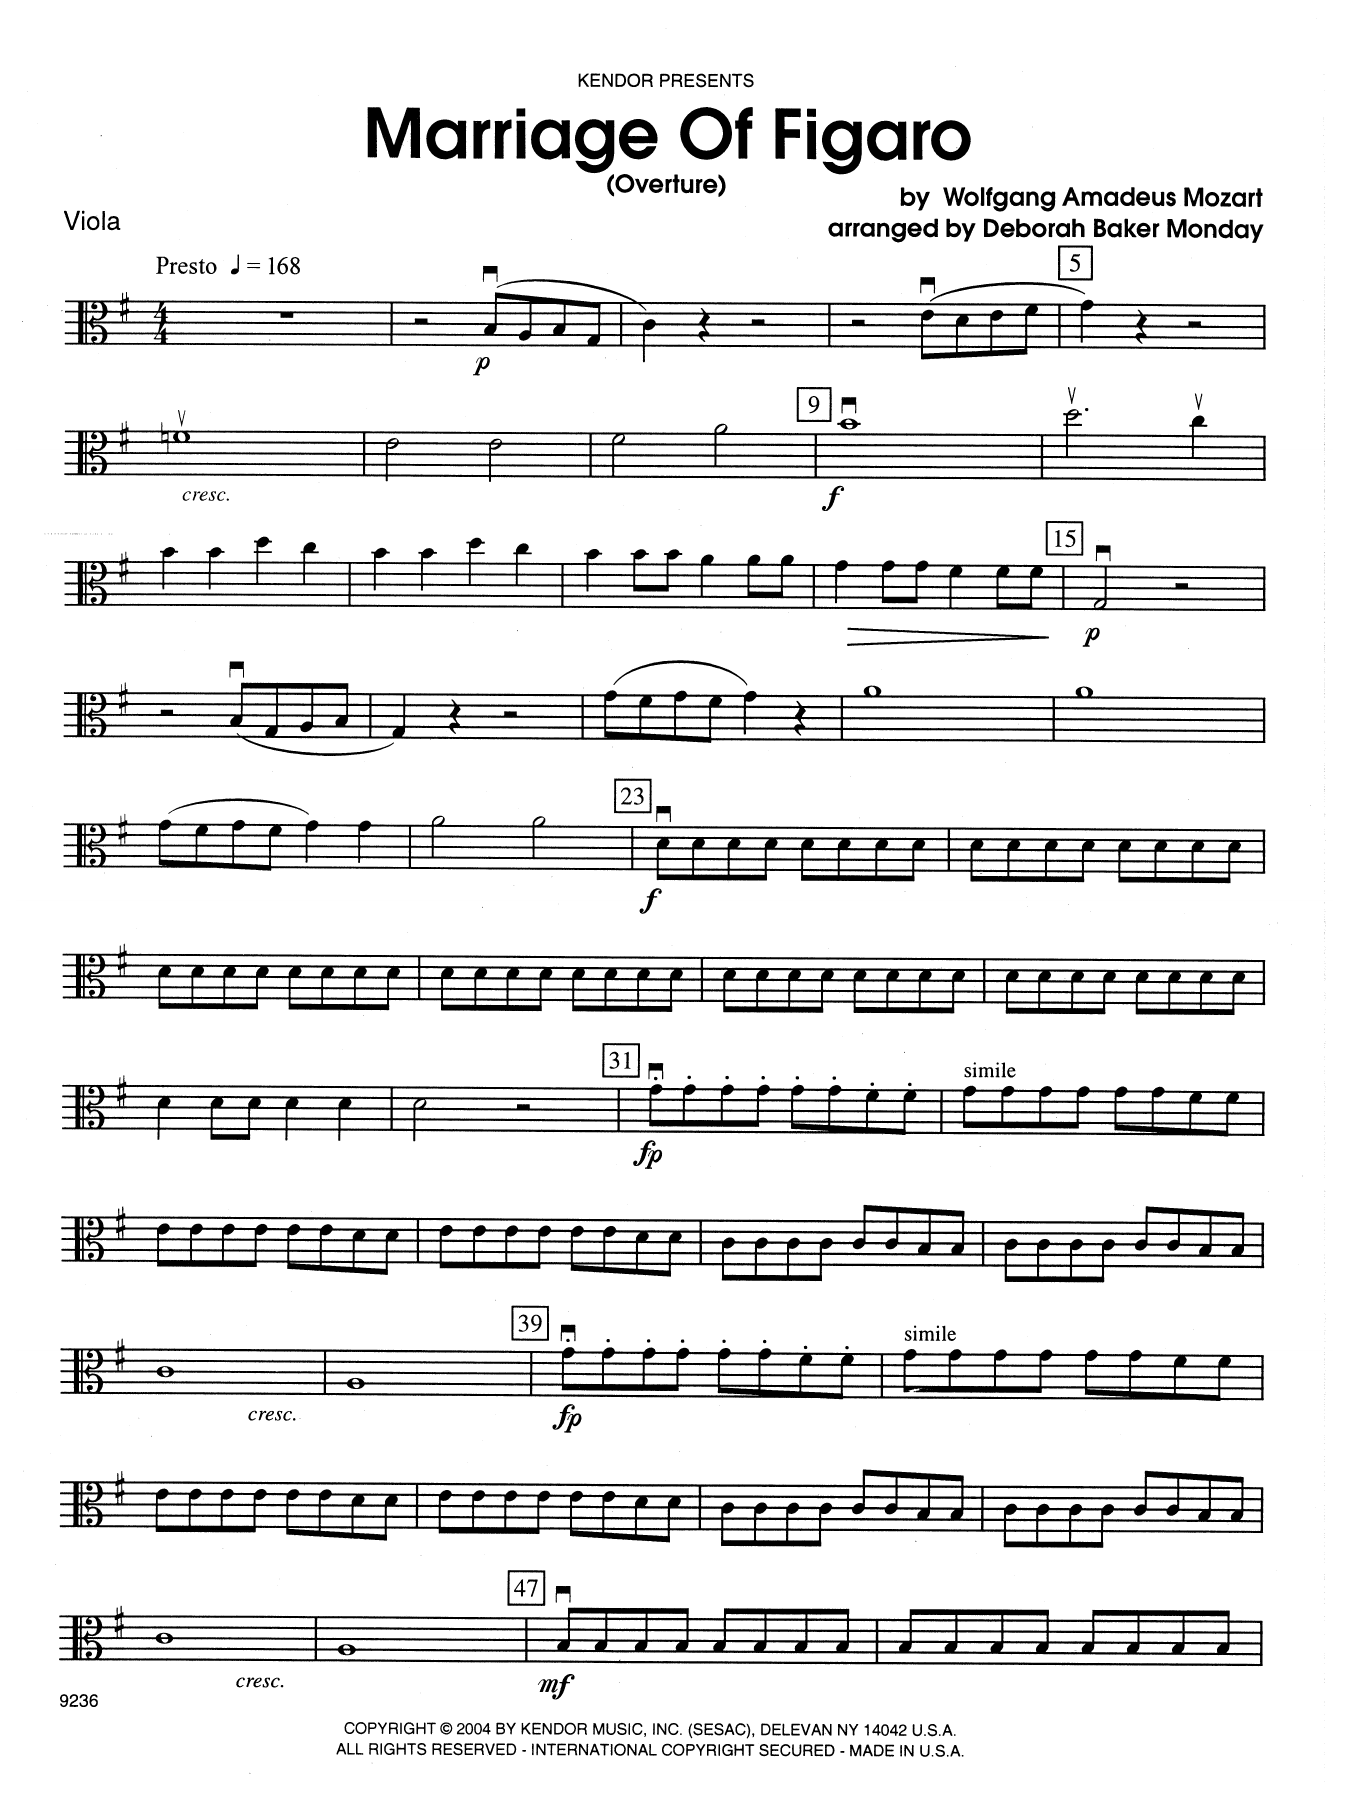 Download Deborah Baker Monday Marriage Of Figaro (Overture) - Viola Sheet Music